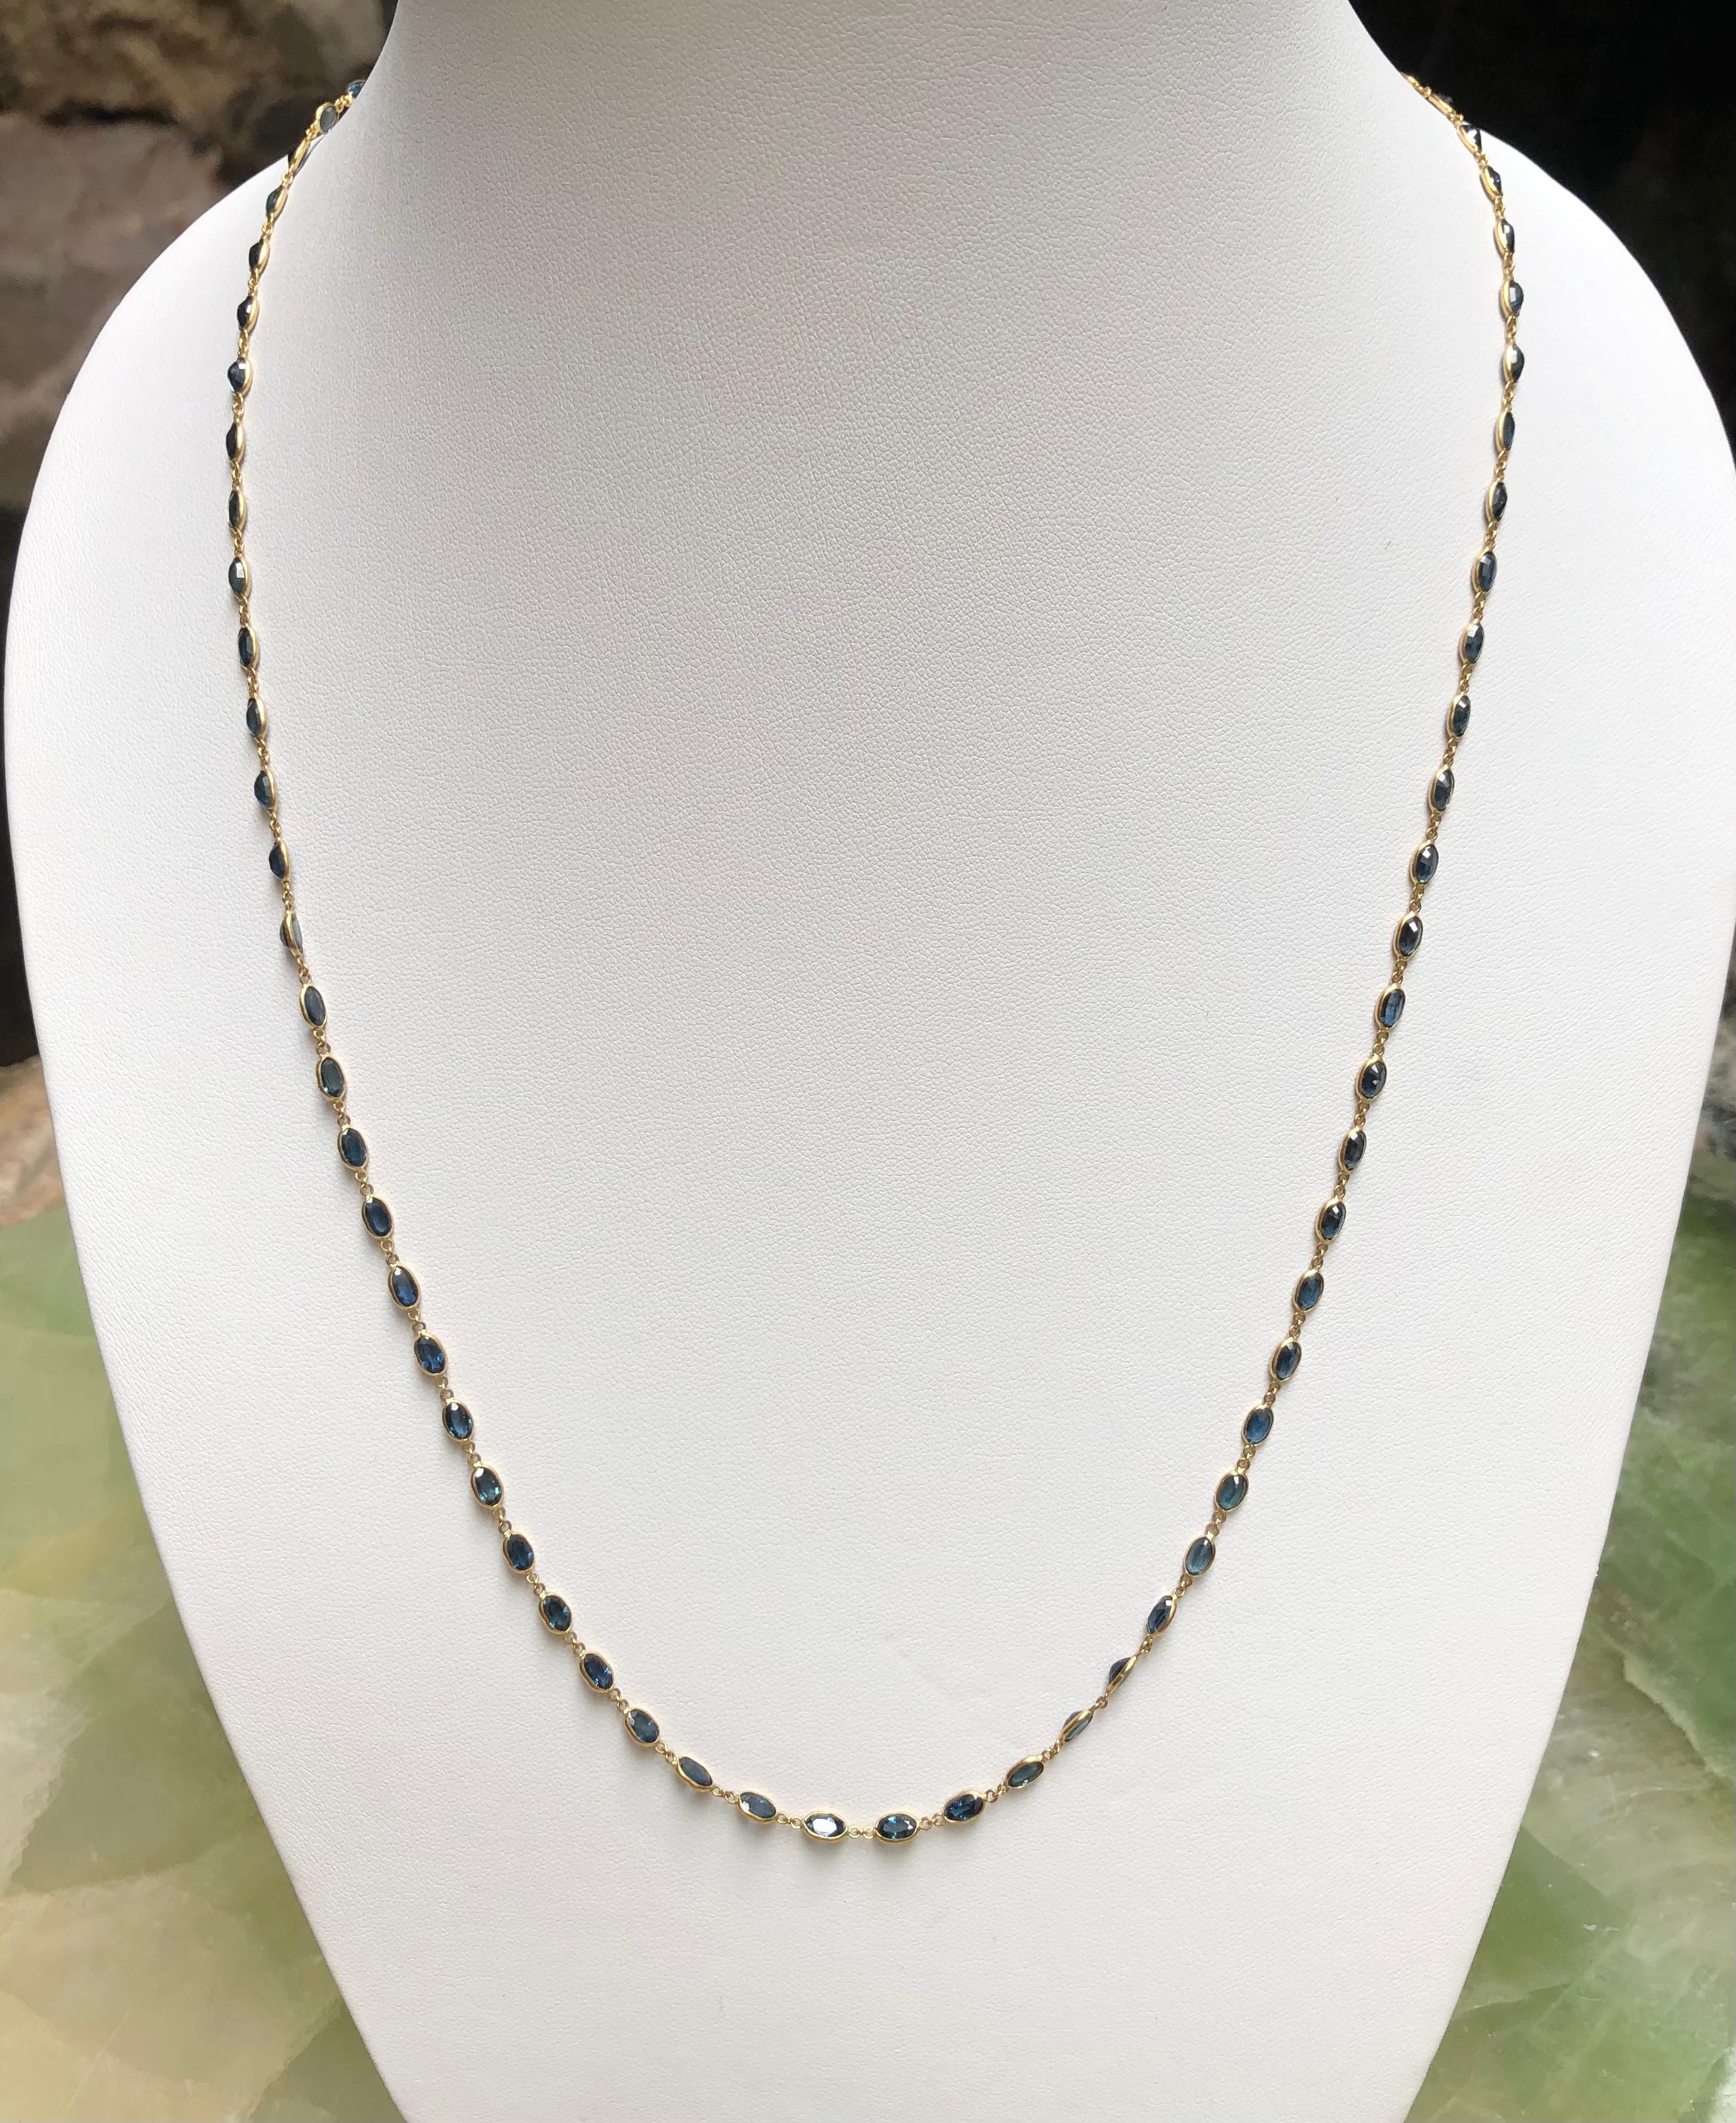 Blue Sapphire 23.31 carats Necklace set in 18 Karat Gold Settings

Width:  0.3 cm 
Length: 66.5 cm (26